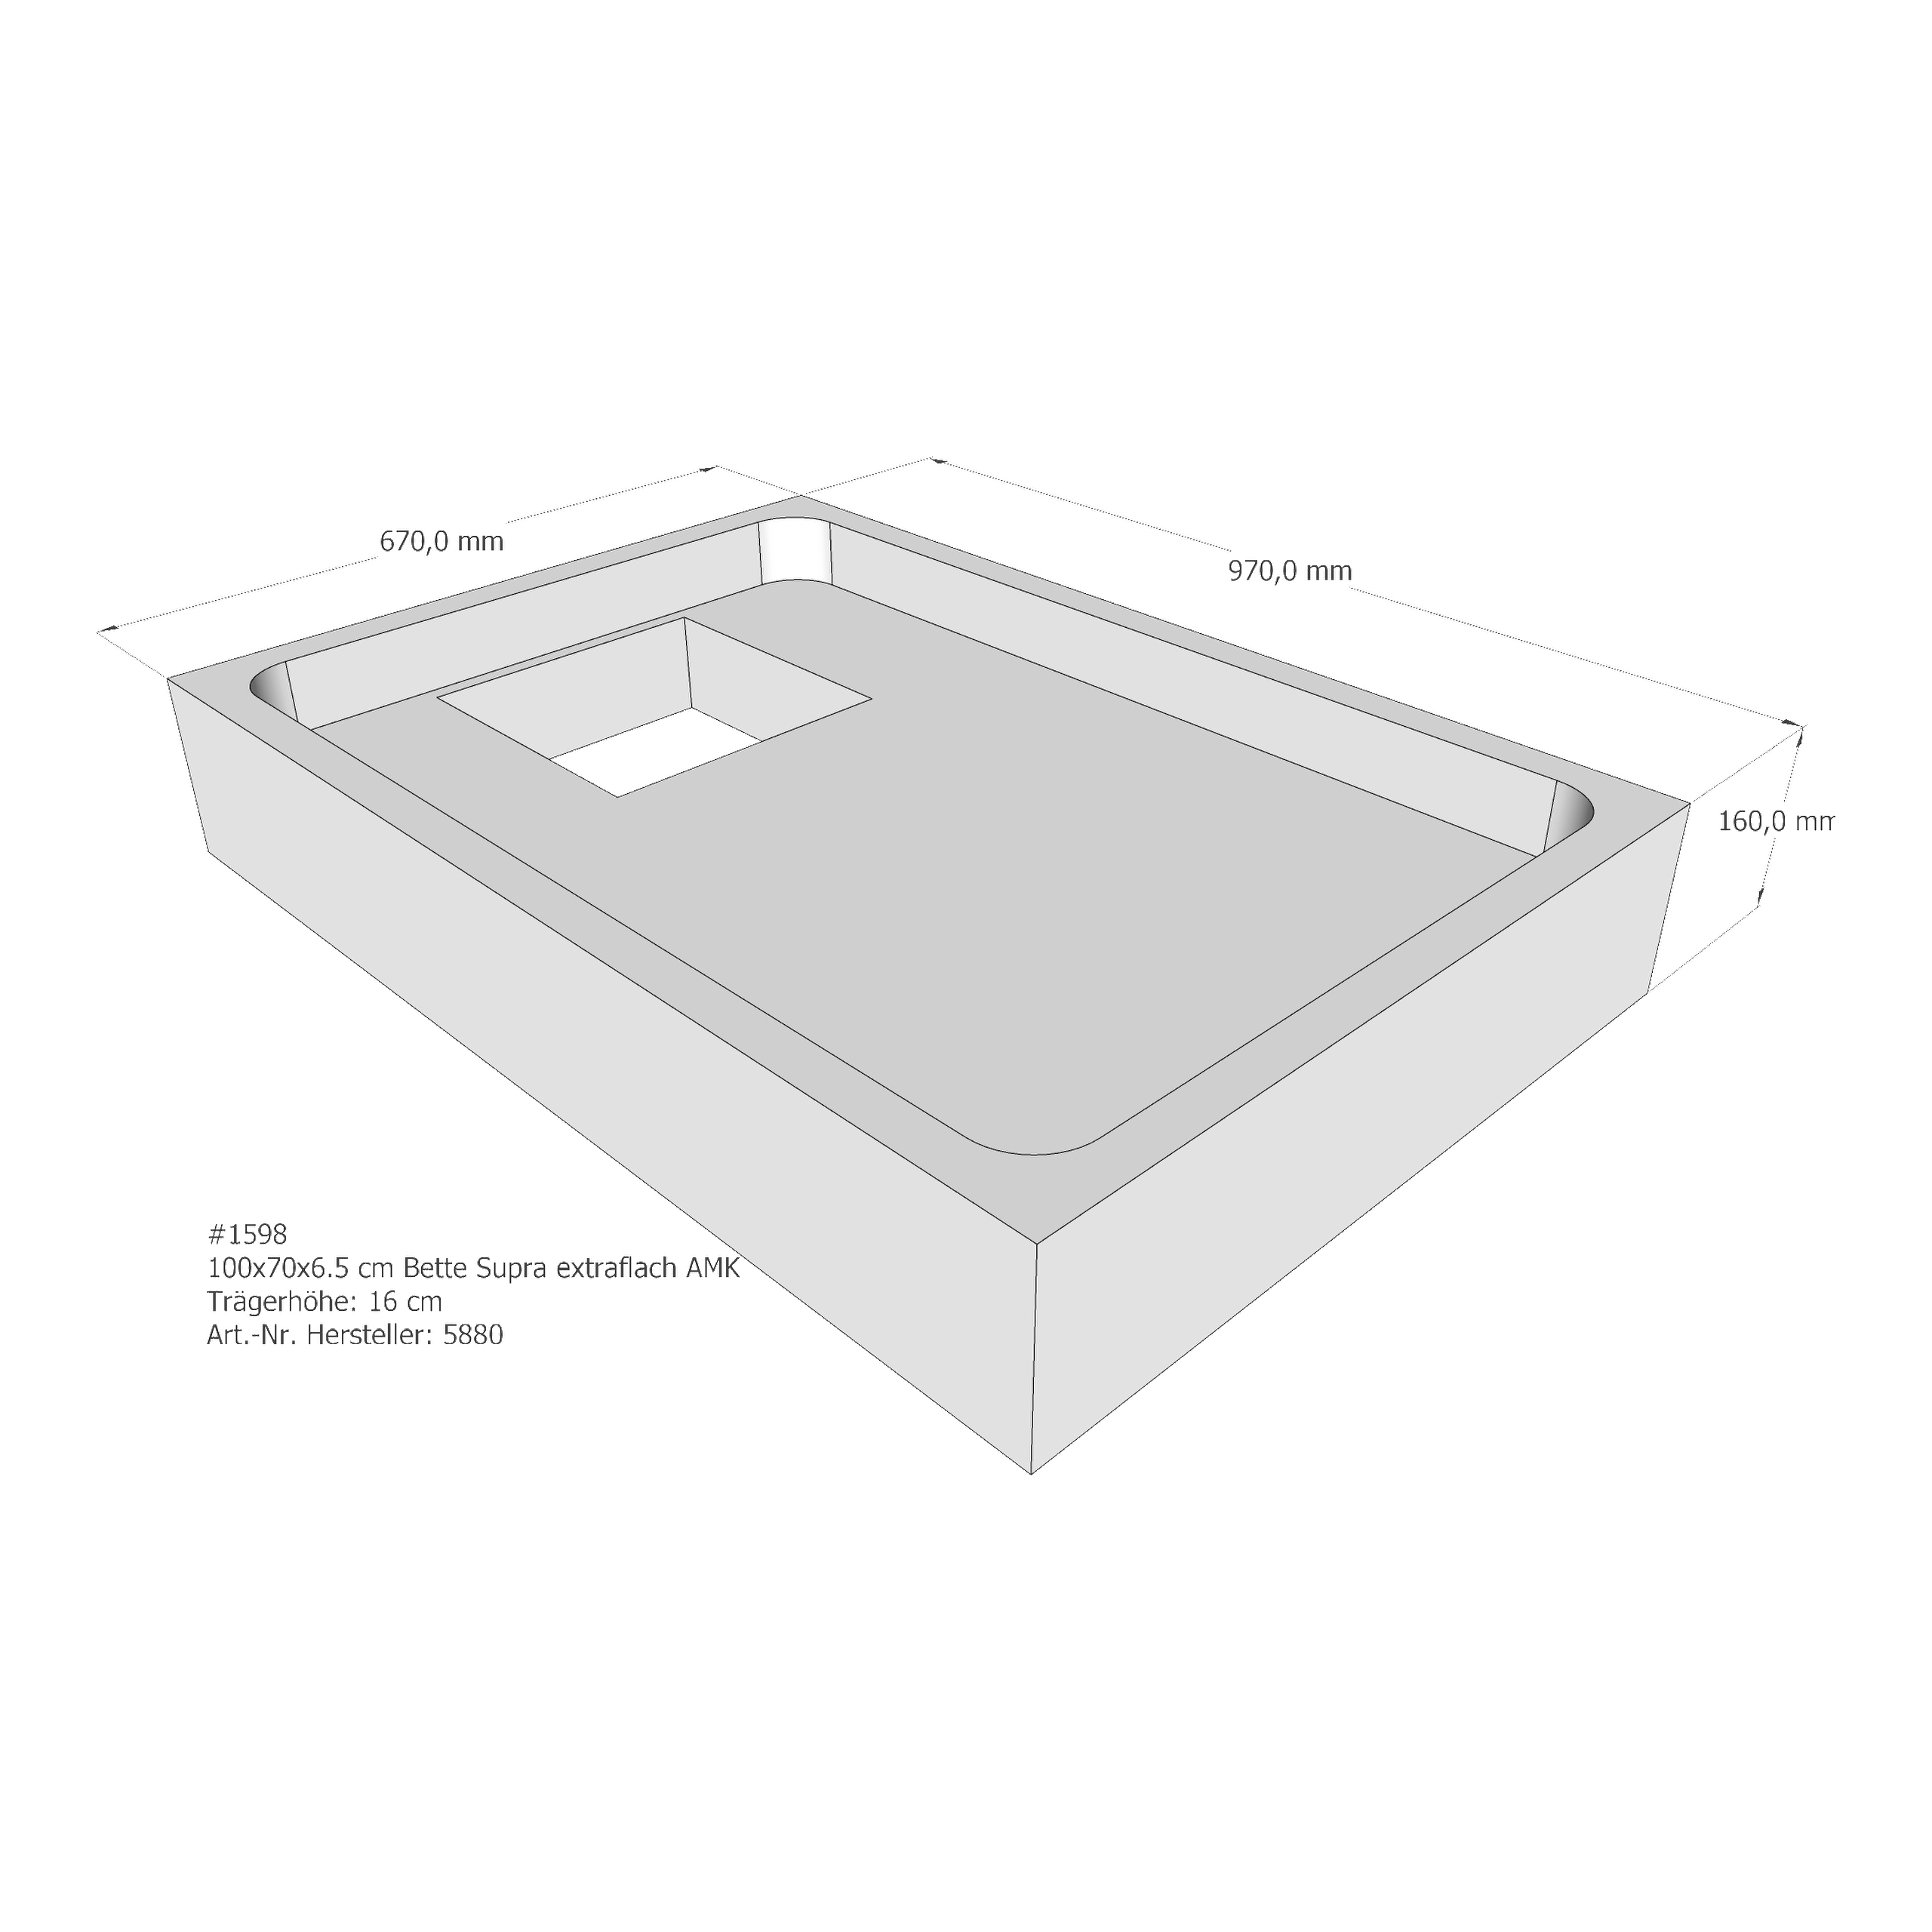 Duschwannenträger Bette BetteSupra (extraflach) 100x70x6,5 cm AMK210